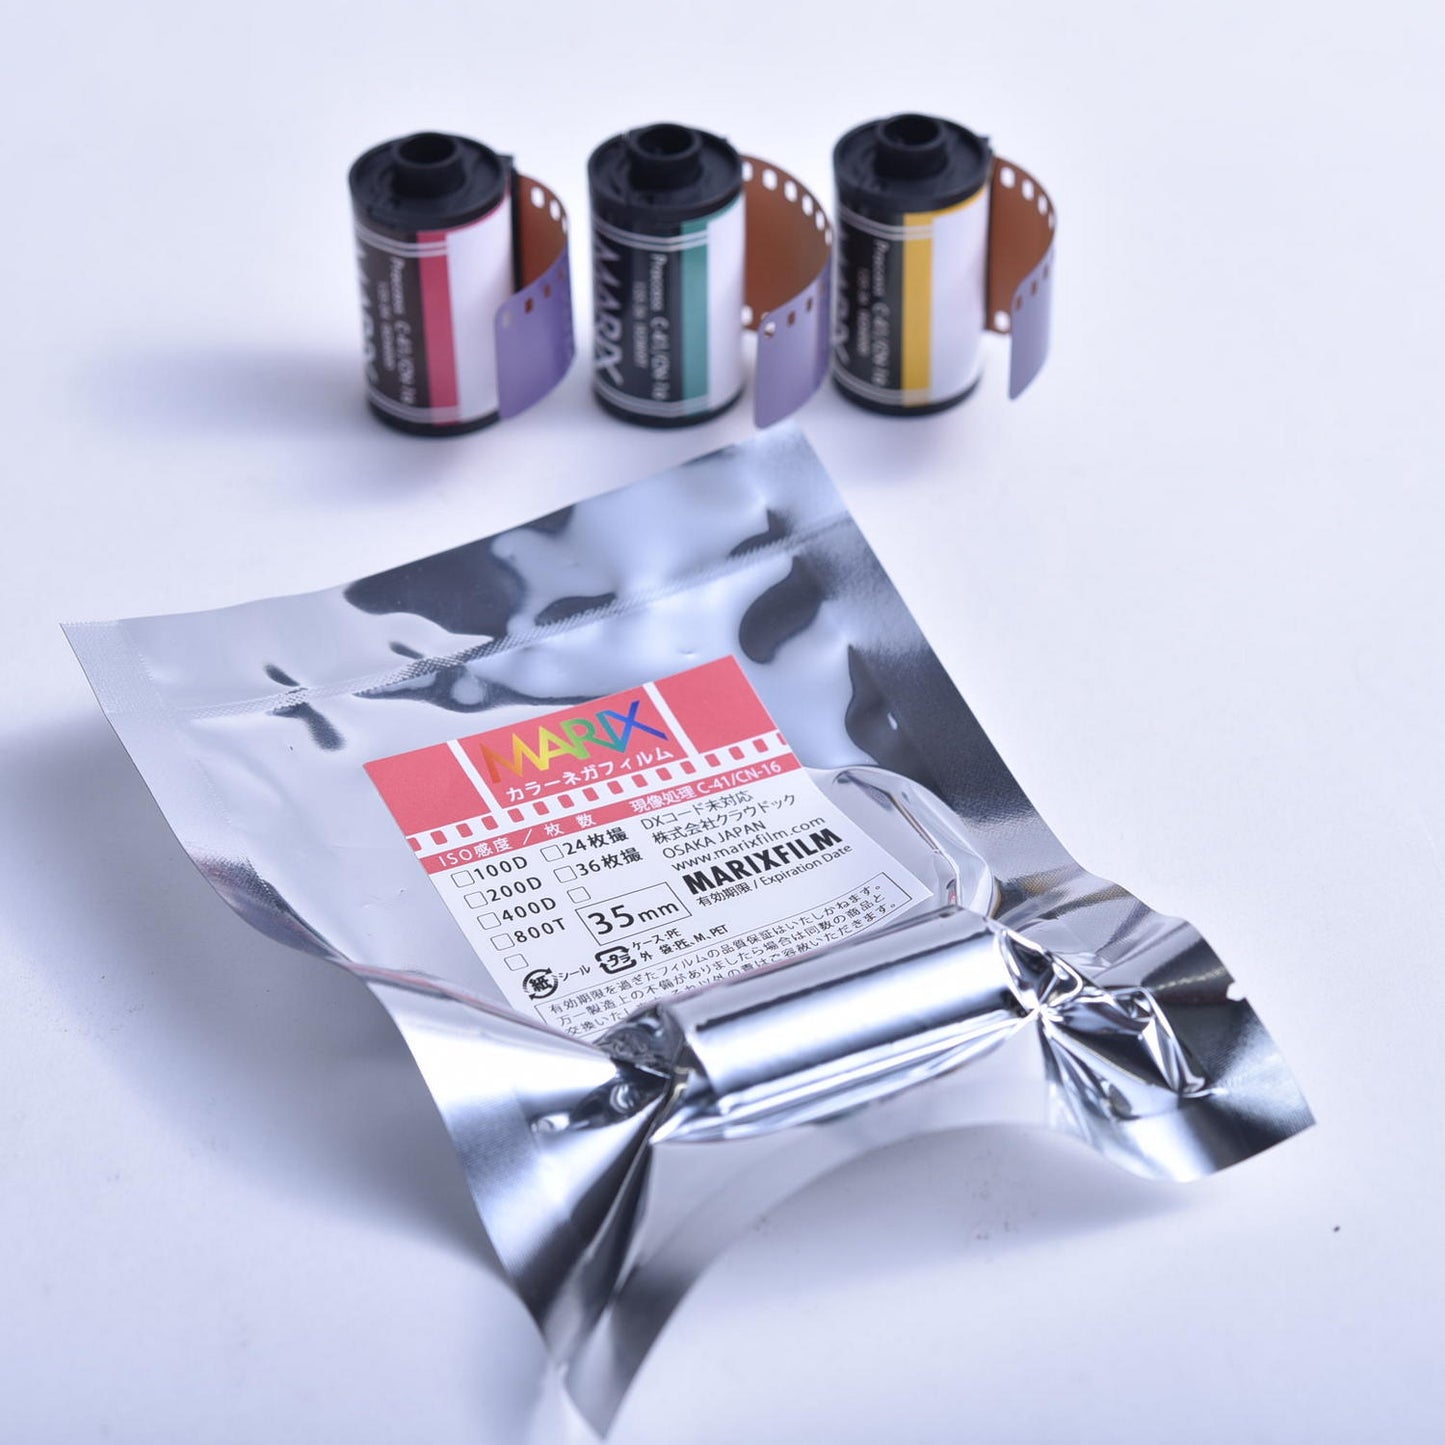 [Free shipping 10 piece set] MARIX color negative film 100D 24 sheets MARIX Color movie NegaFilm